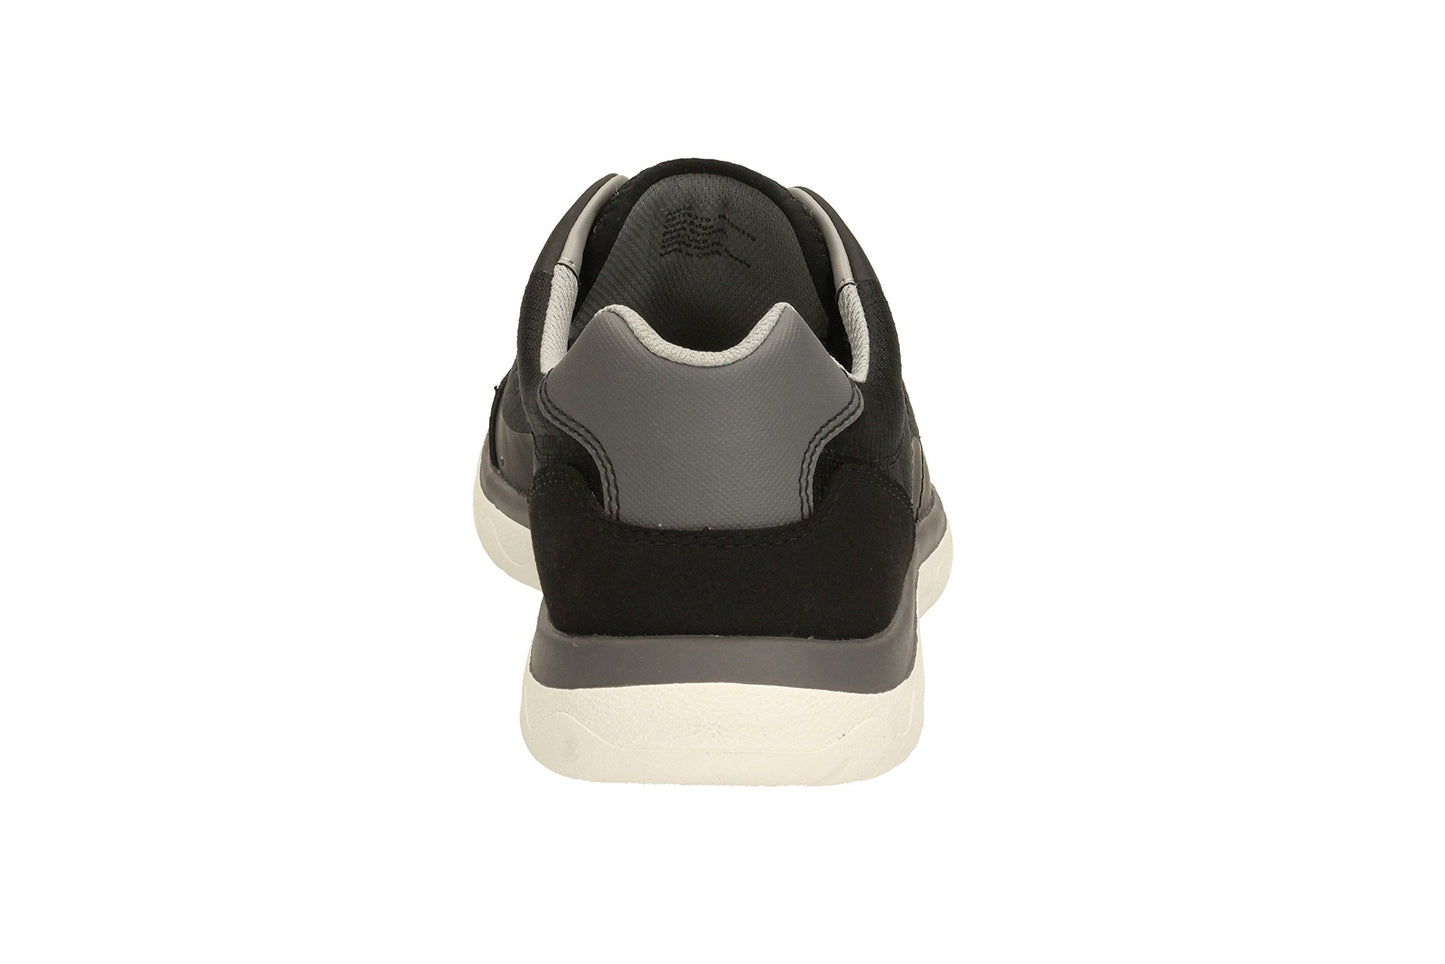 Clarks Men's Votta Edge Black Boat Shoes - 9 UK/India (43 EU)(91261203197090) 